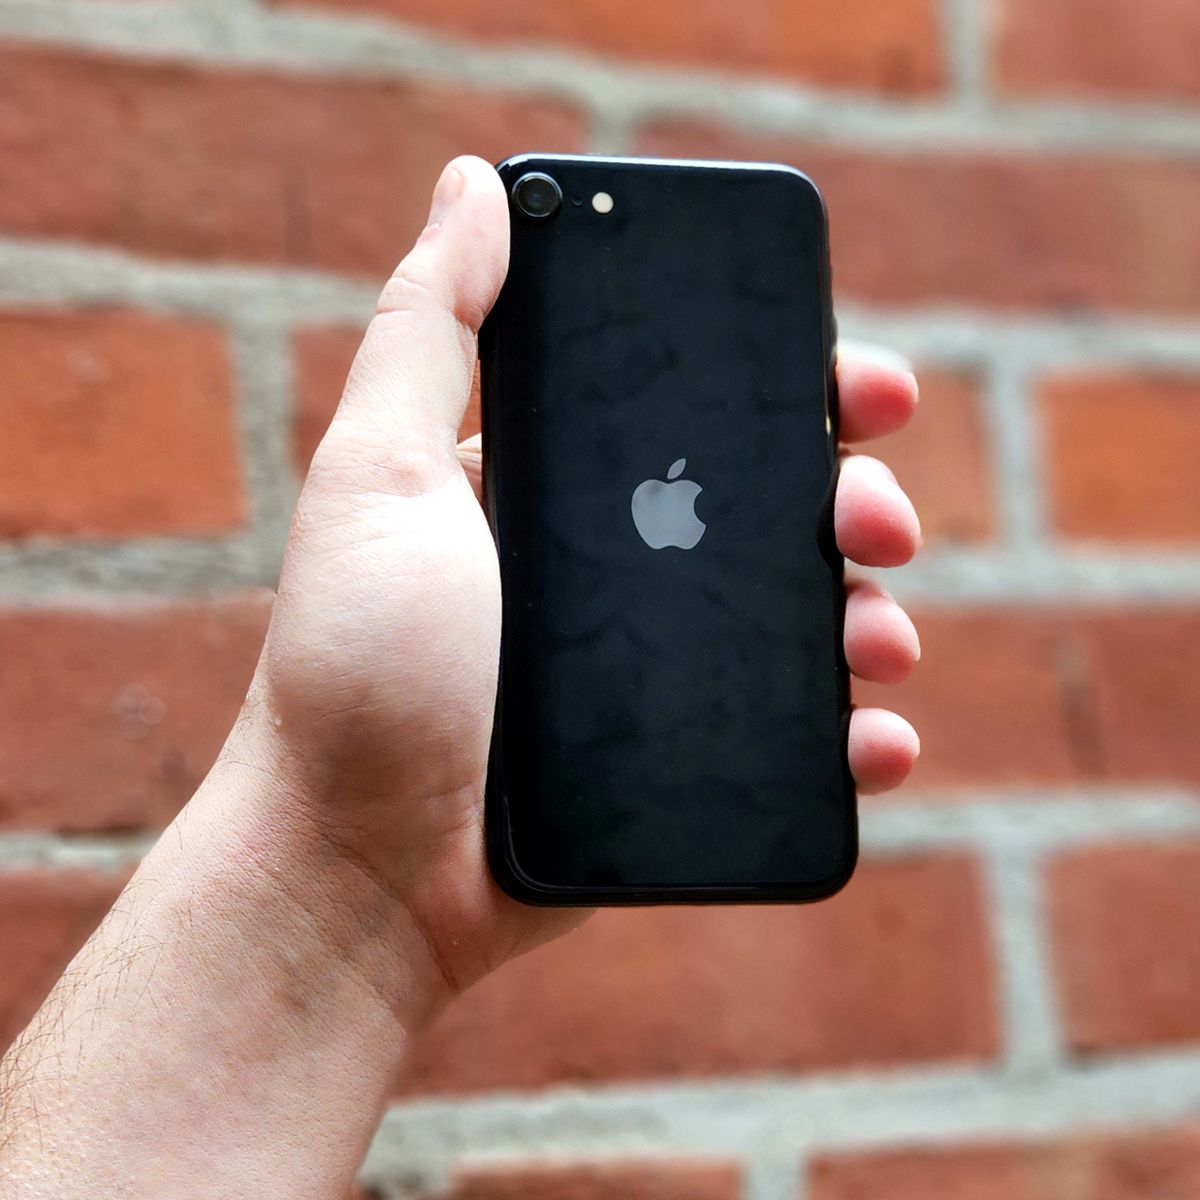 Gemakkelijk Hobart Aarde iPhone SE Review: A Superb Smartphone For a Small Price